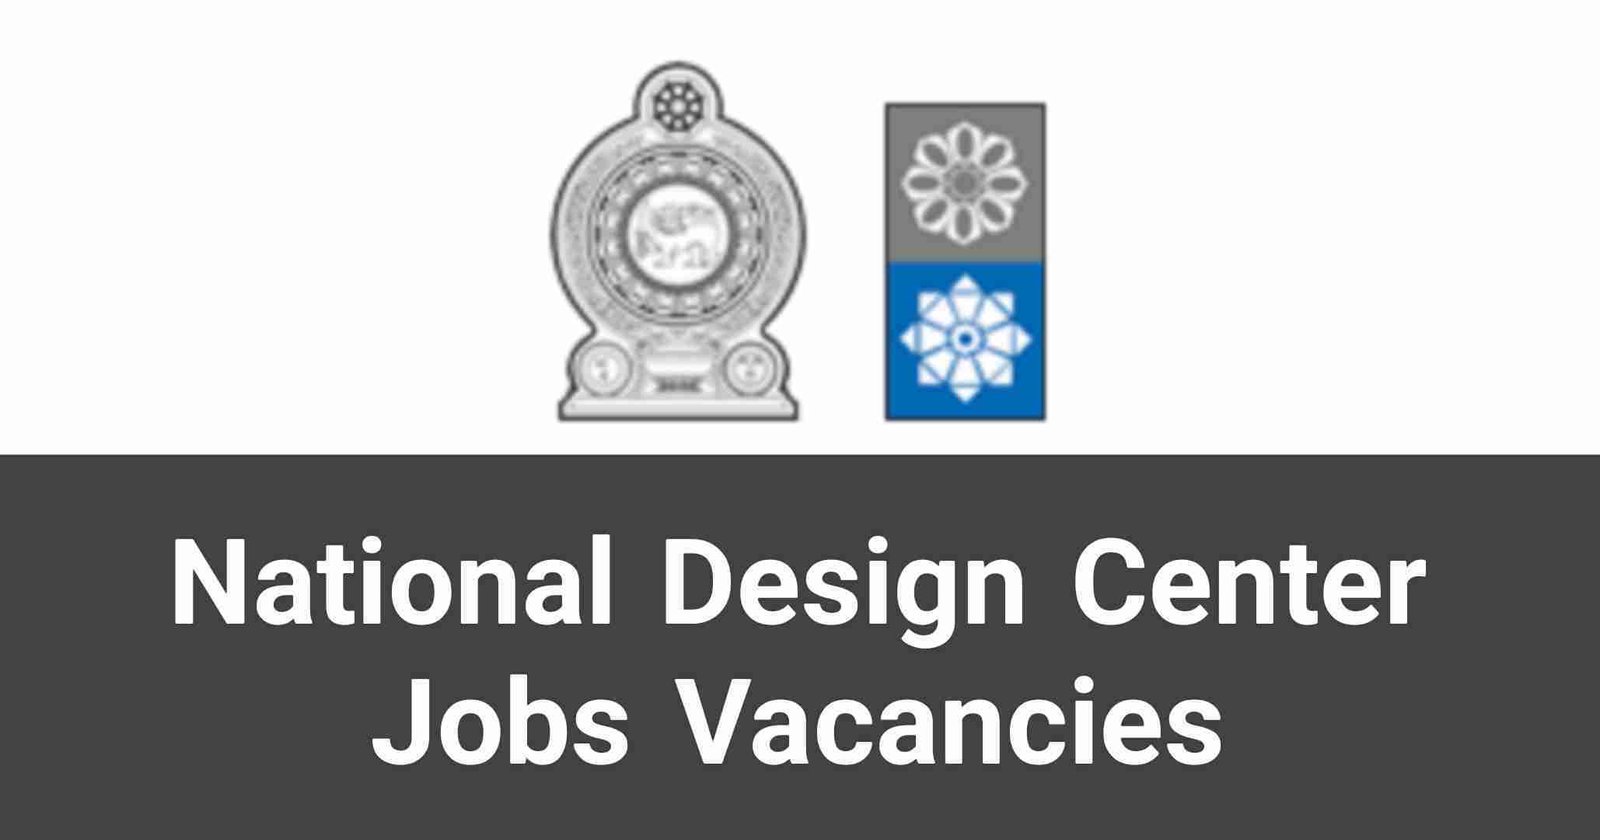 National Design Center Jobs Vacancies